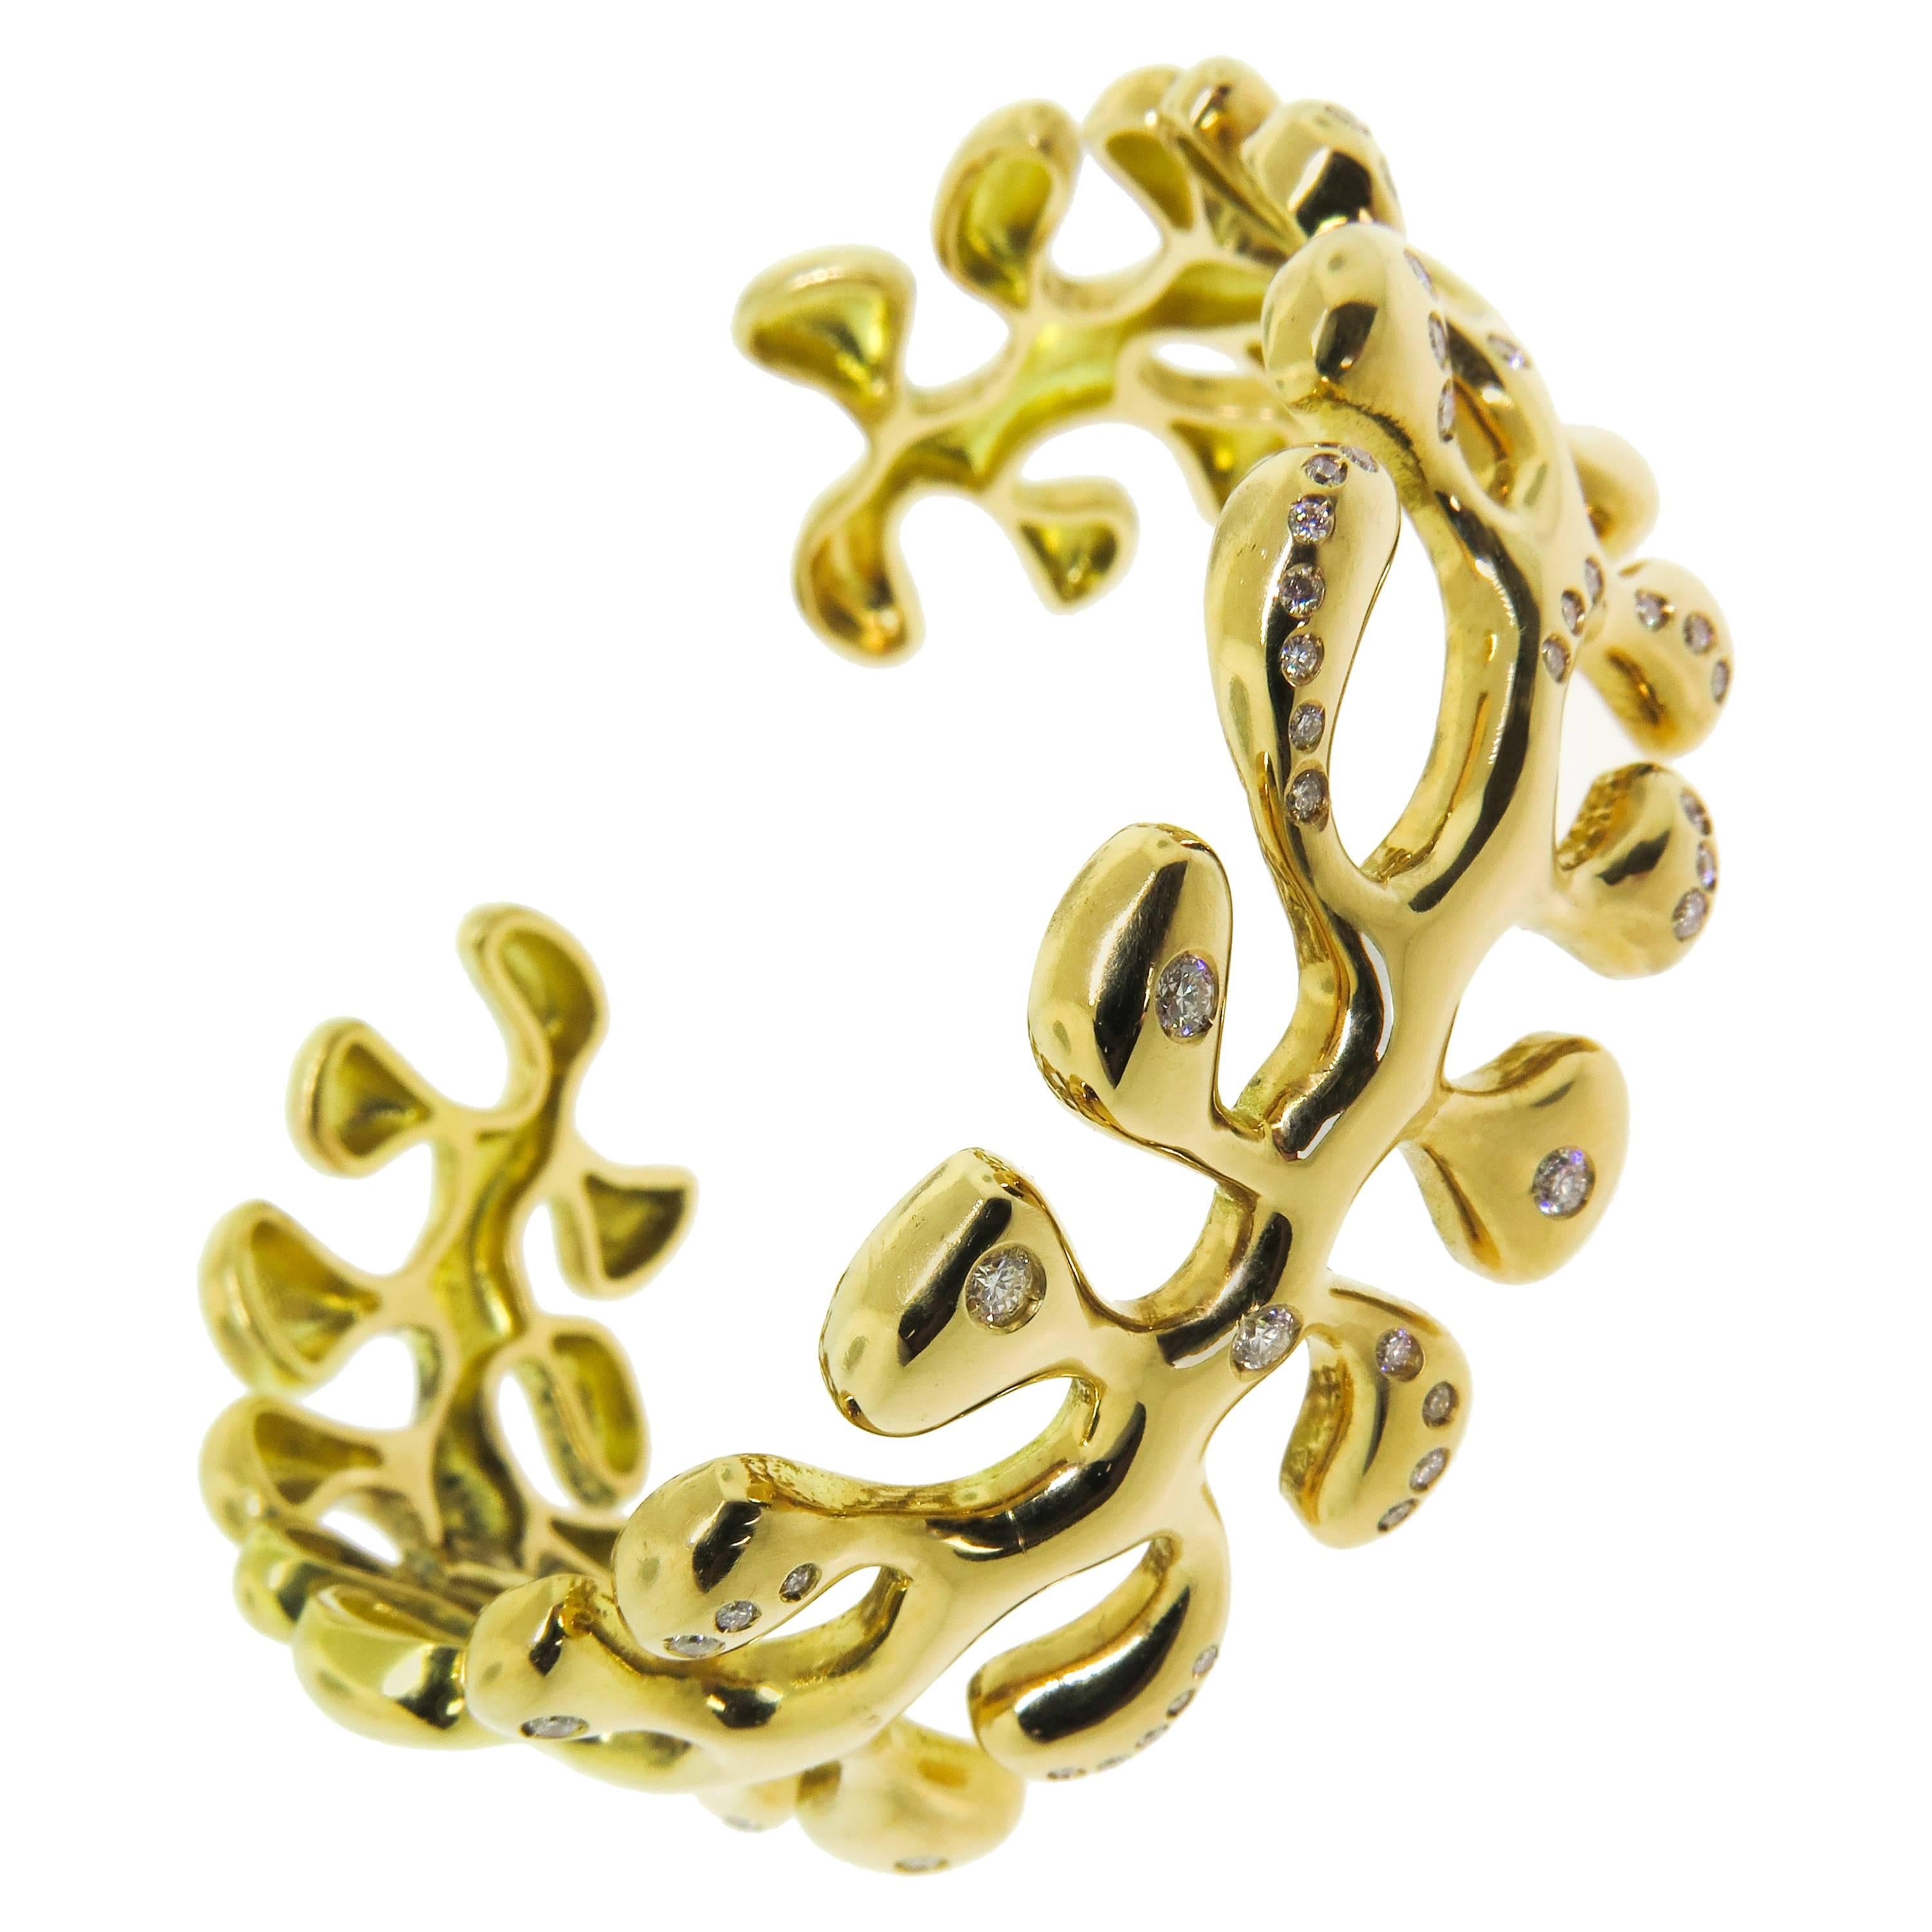 Gold Sea Leaf Cuff Bracelet with Diamond Accents